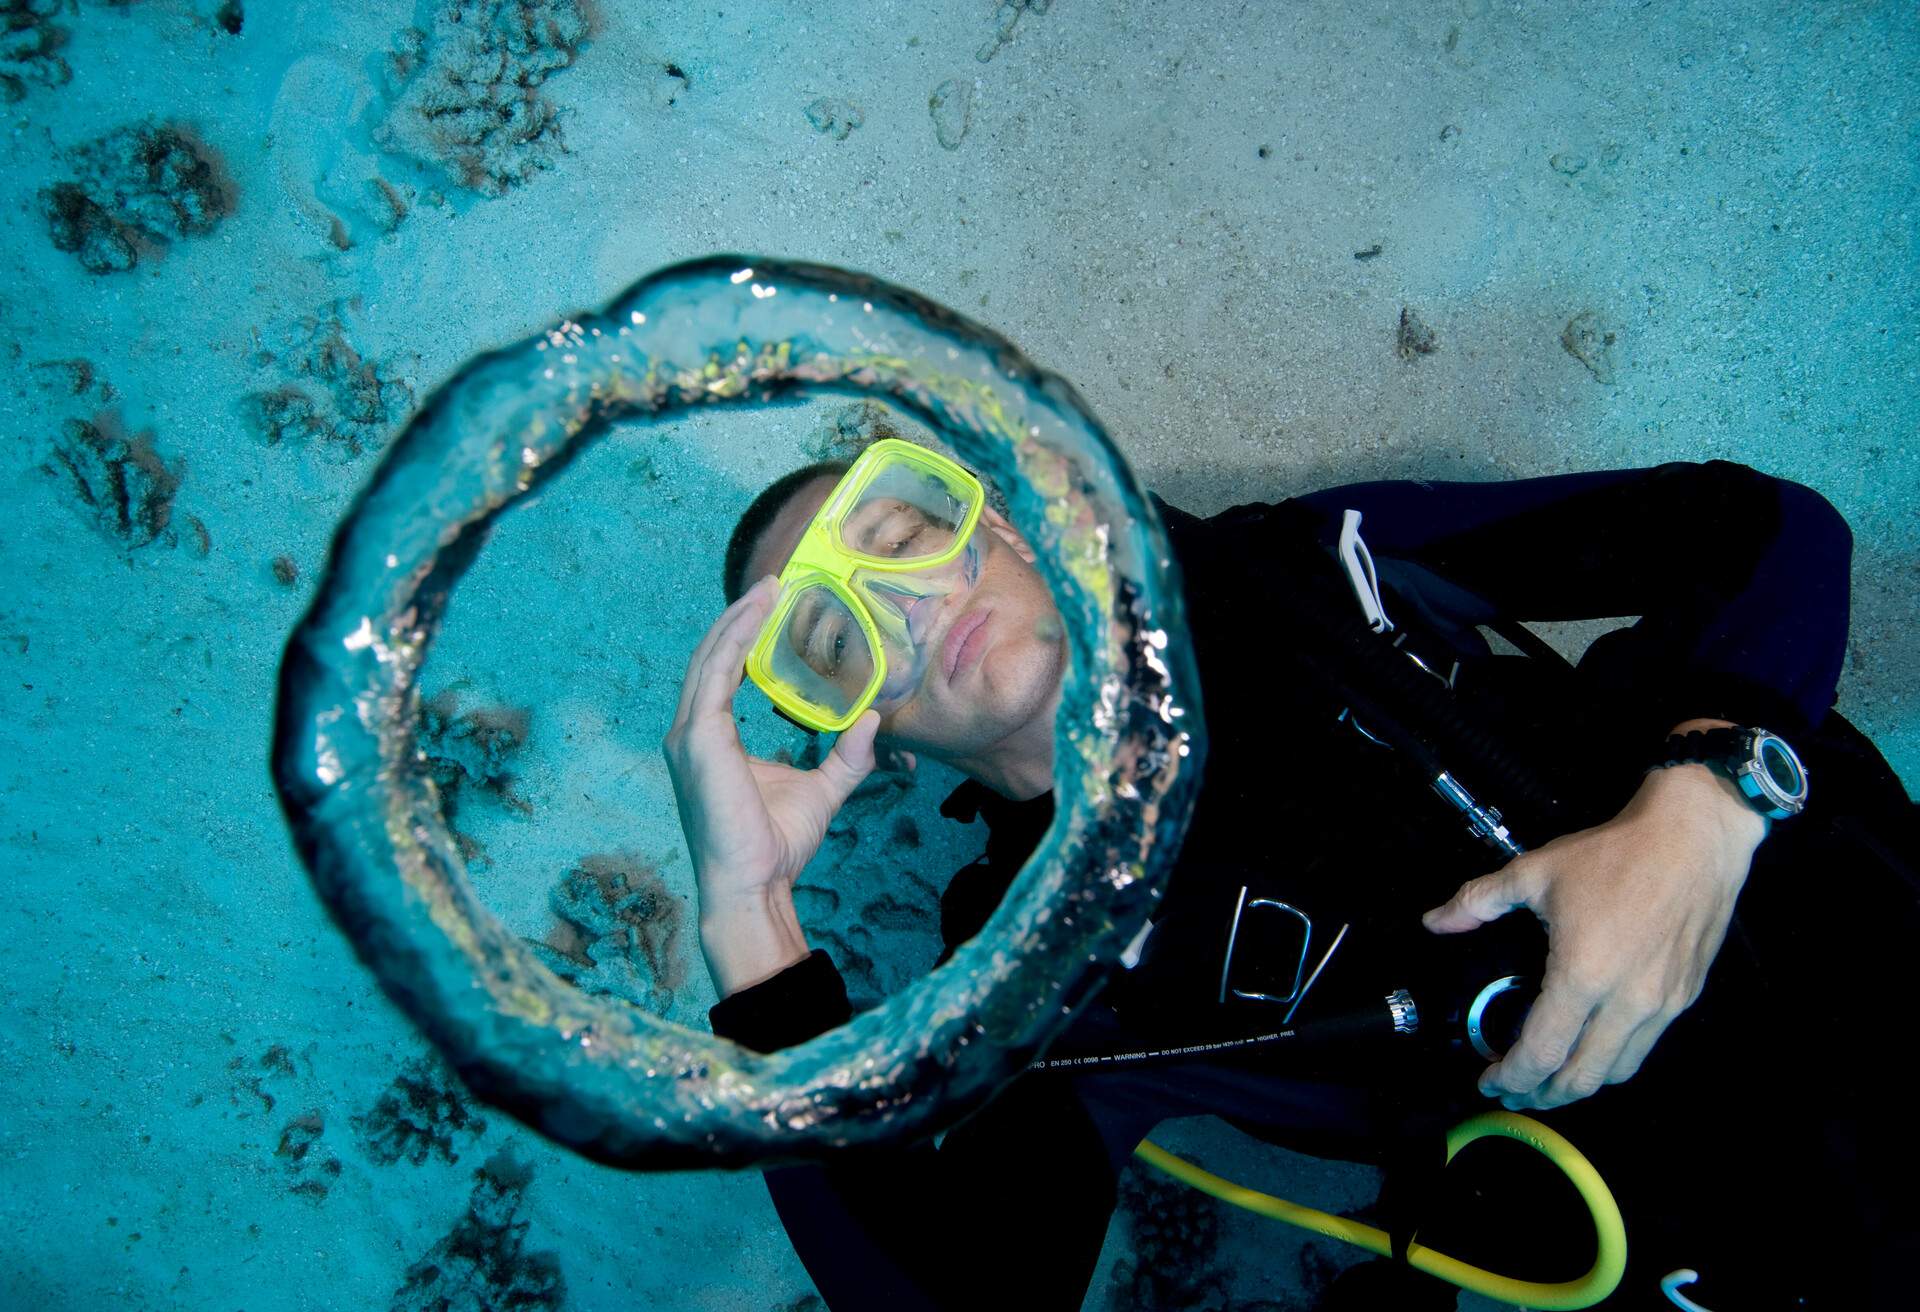 Scuba diver blows air bubble rings underwater.